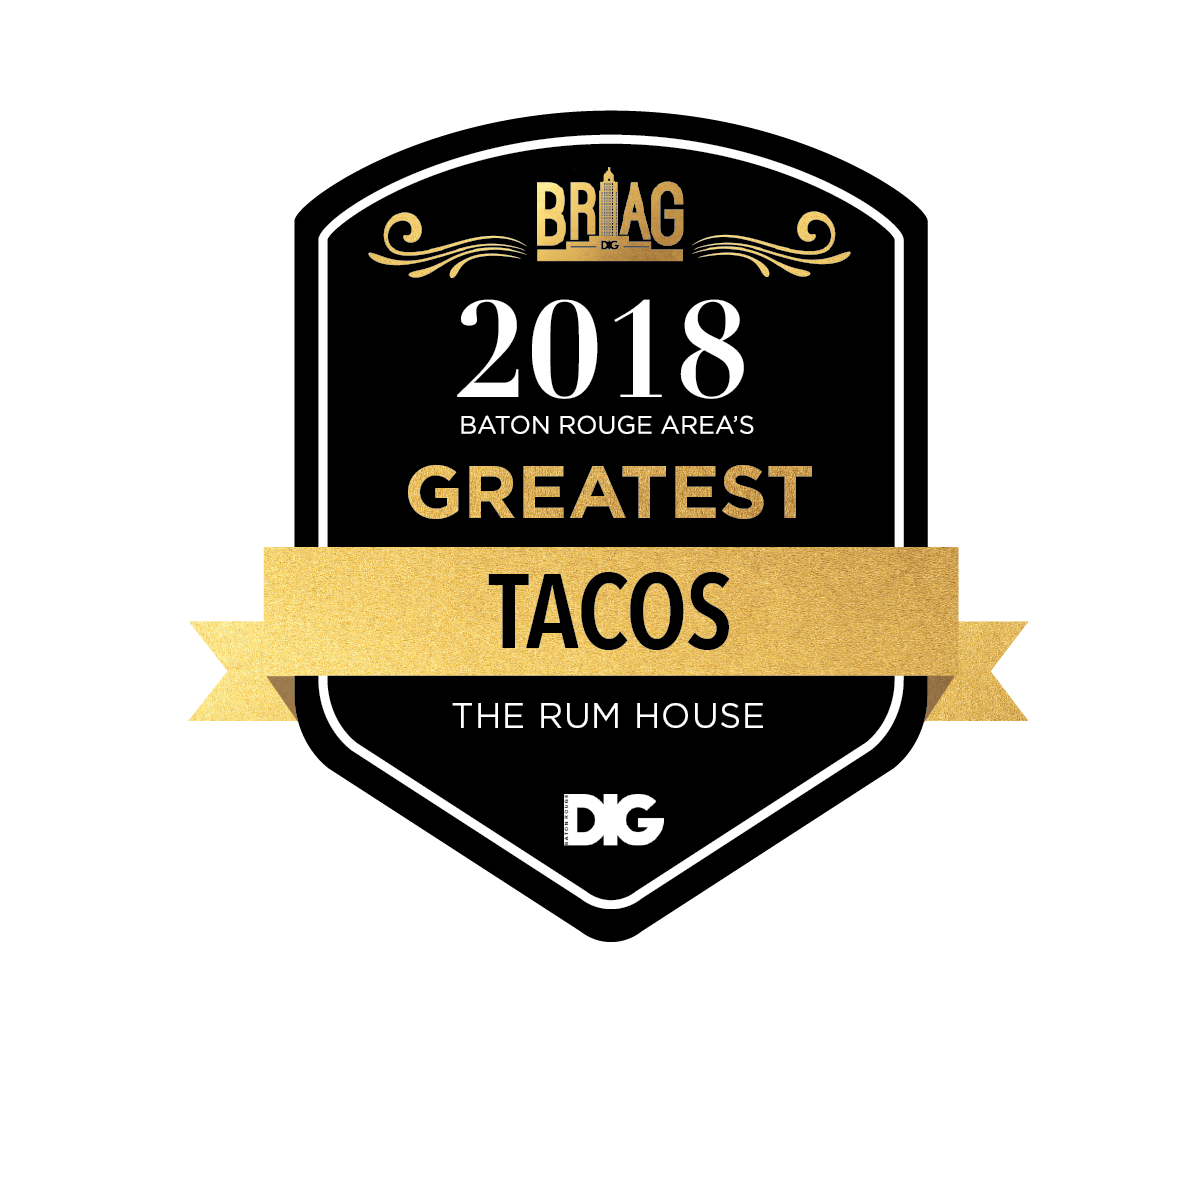 Best tacos Award